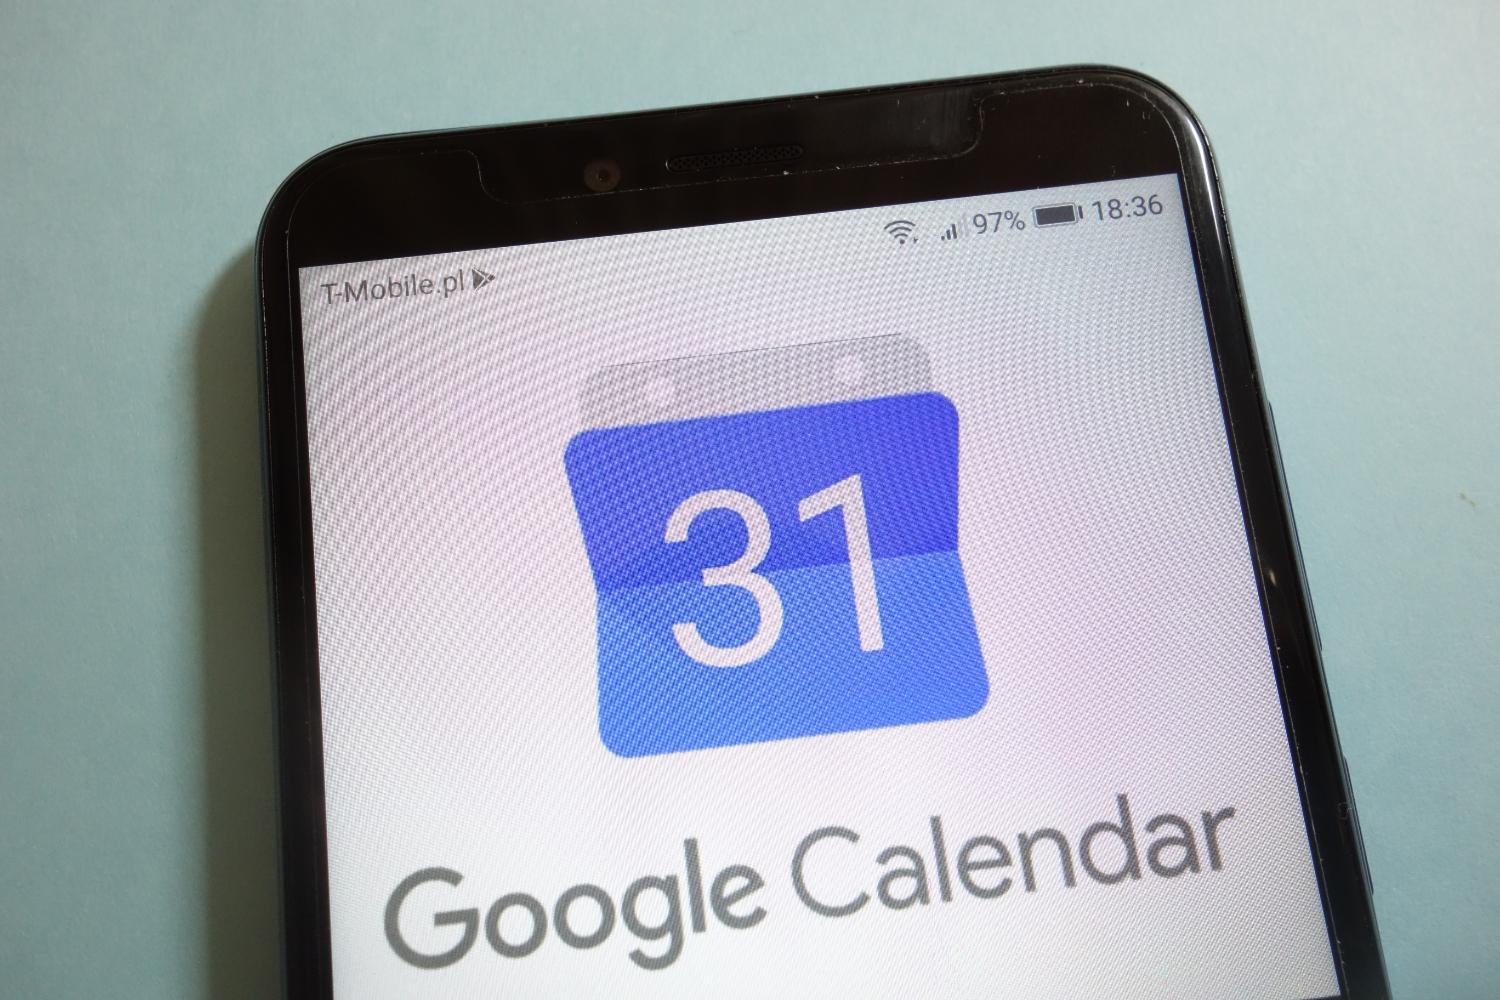 Google Calendar Is Down (Update: It’s Back)